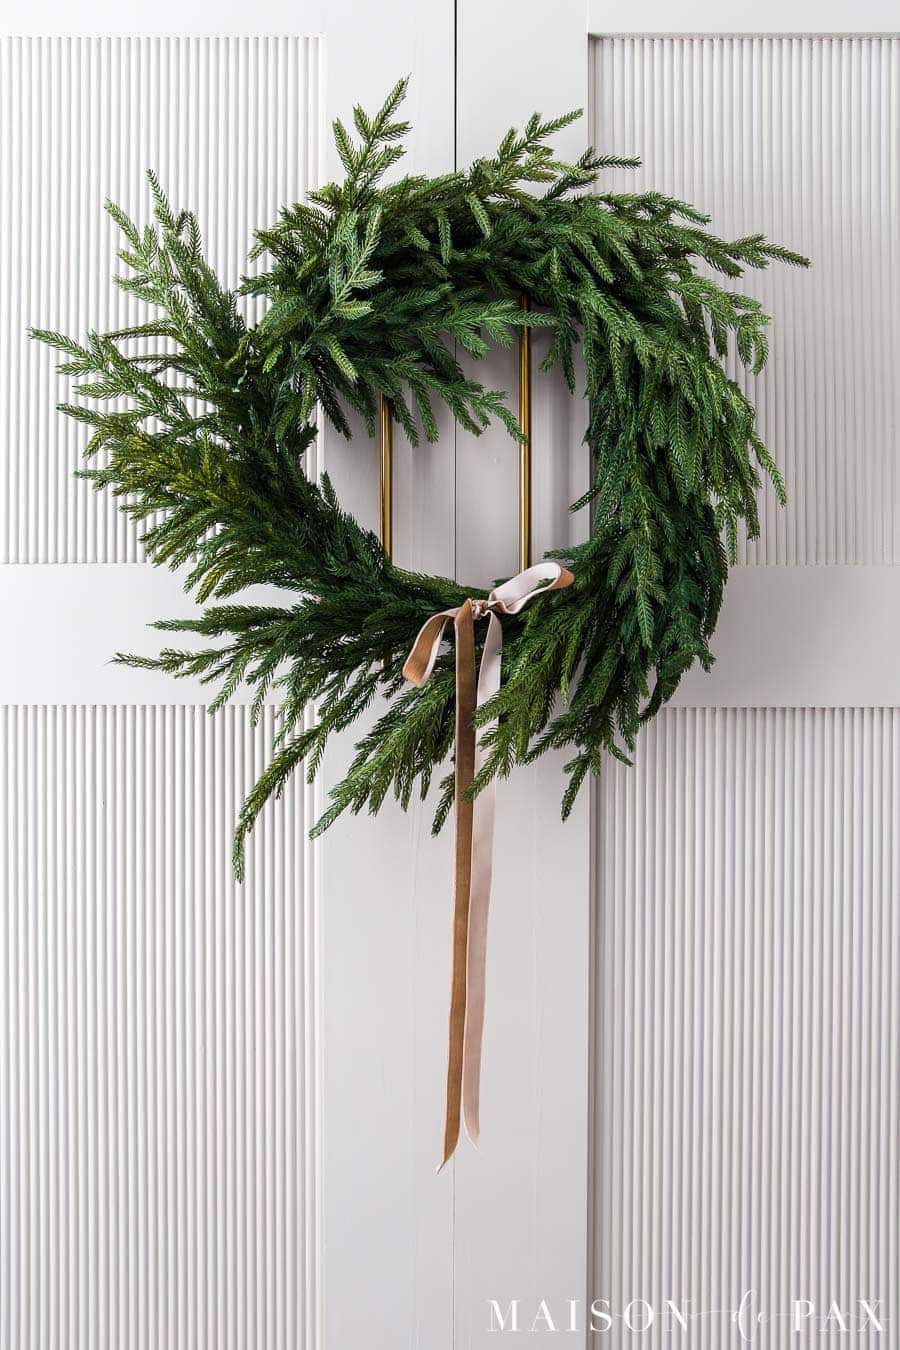 Elegant and simple wreath ideas